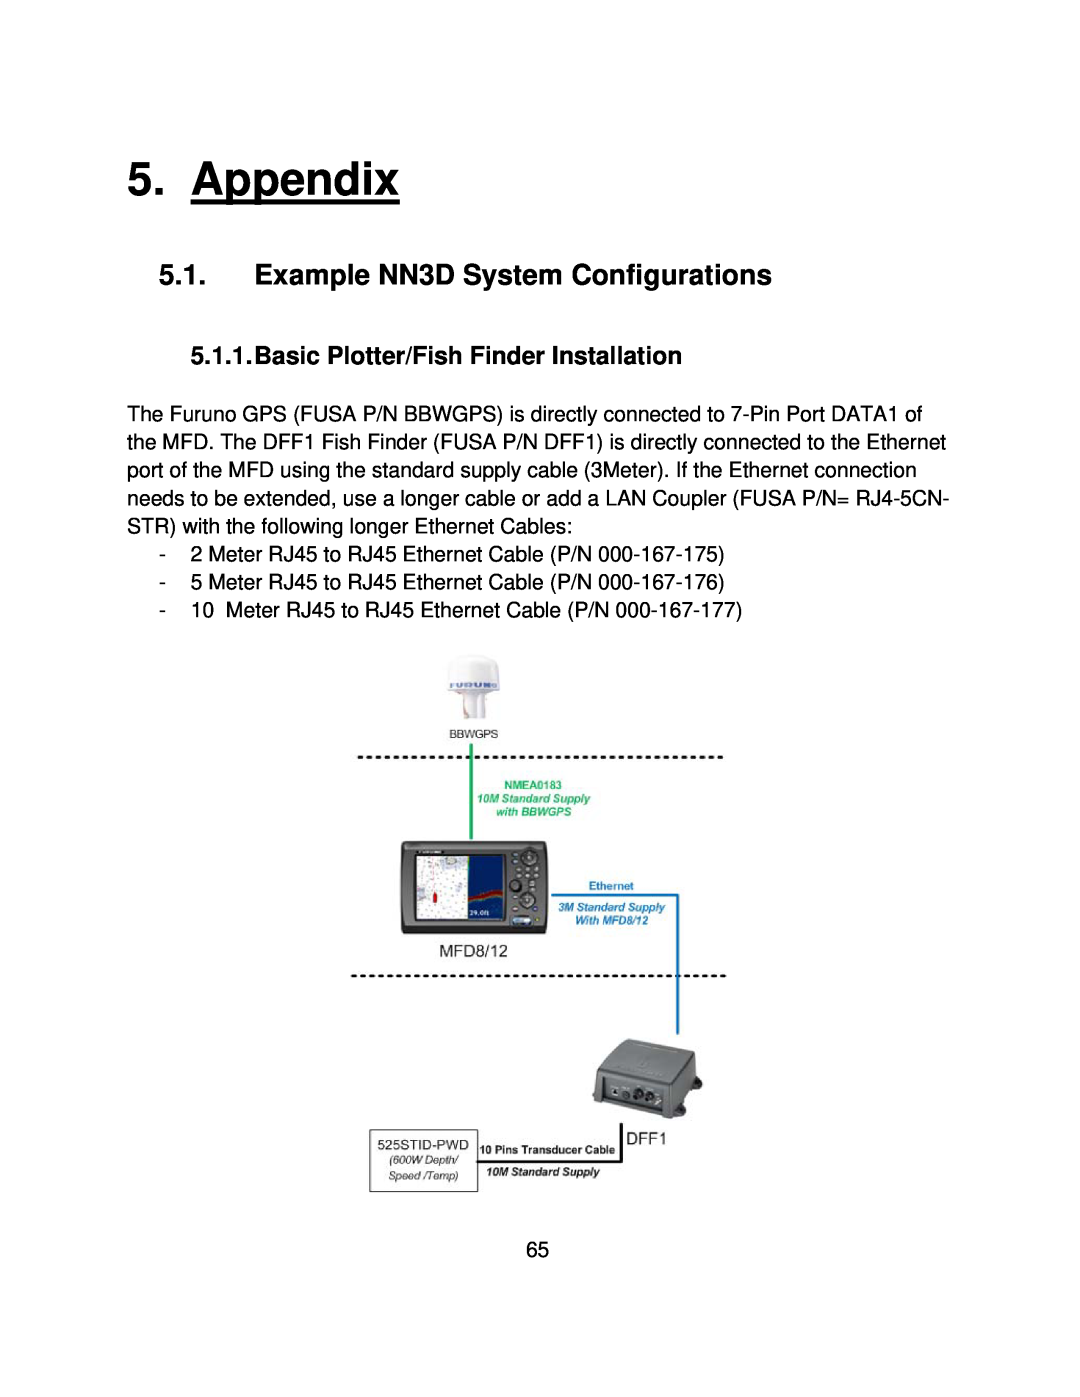 Furuno MFD8/12/BB manual Appendix, Example NN3D System Configurations, Basic Plotter/Fish Finder Installation 